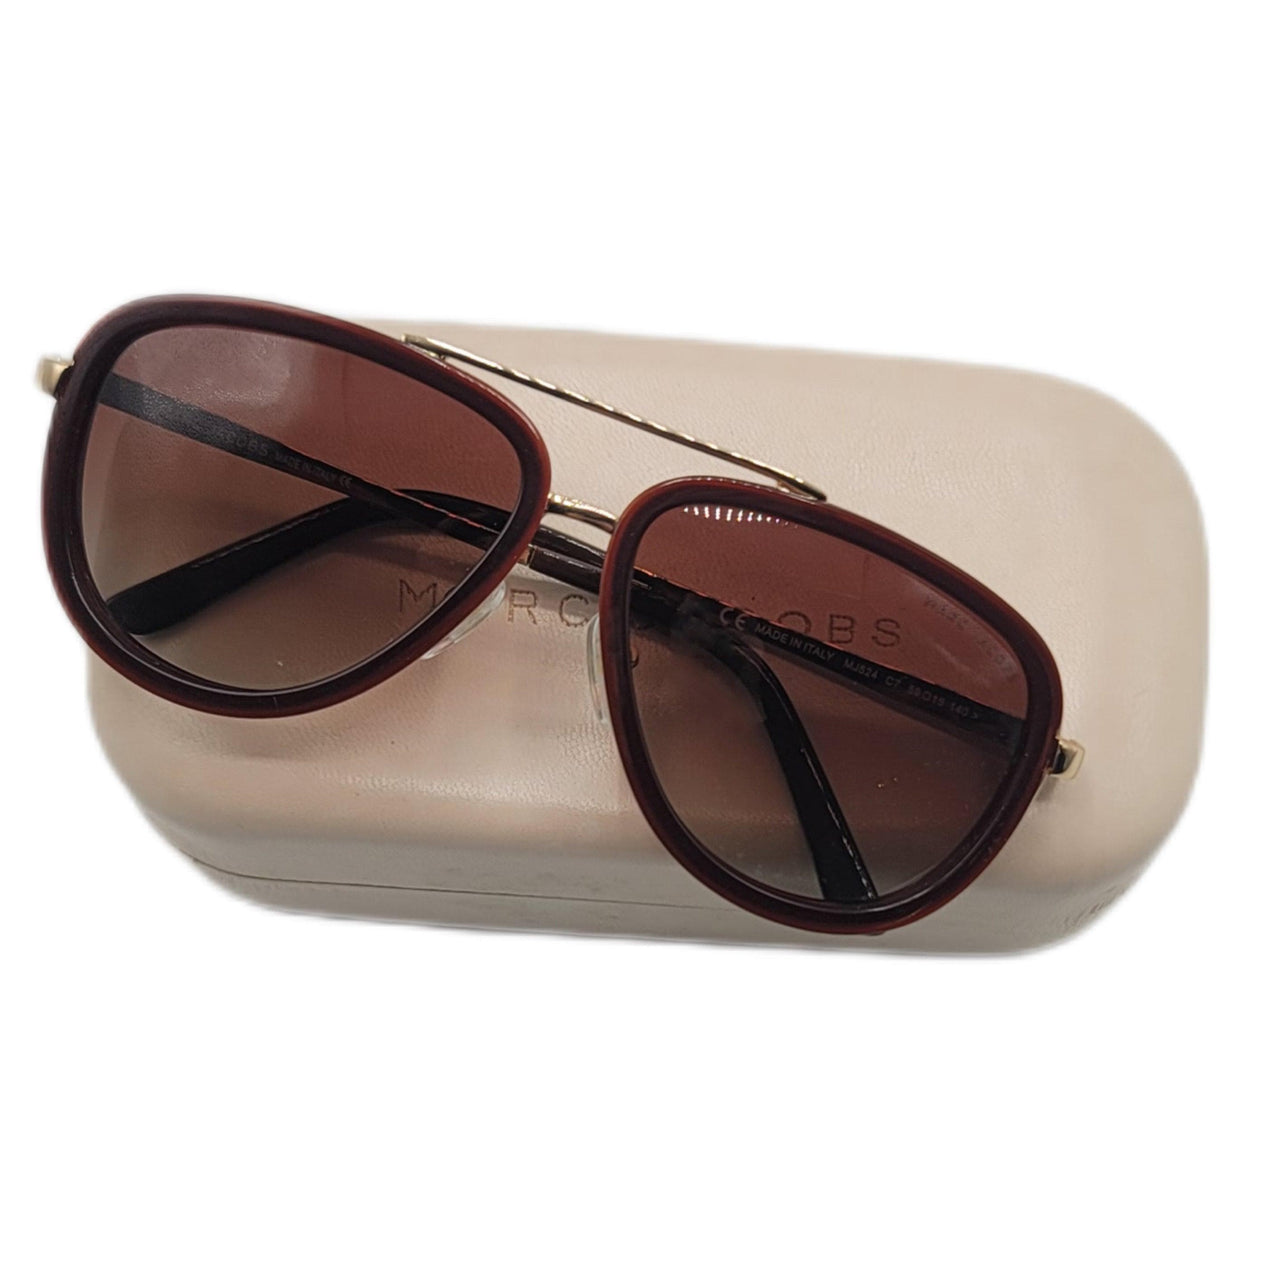 The Bag Couture Sunglasses Marc Jacobs Sunglasses 2